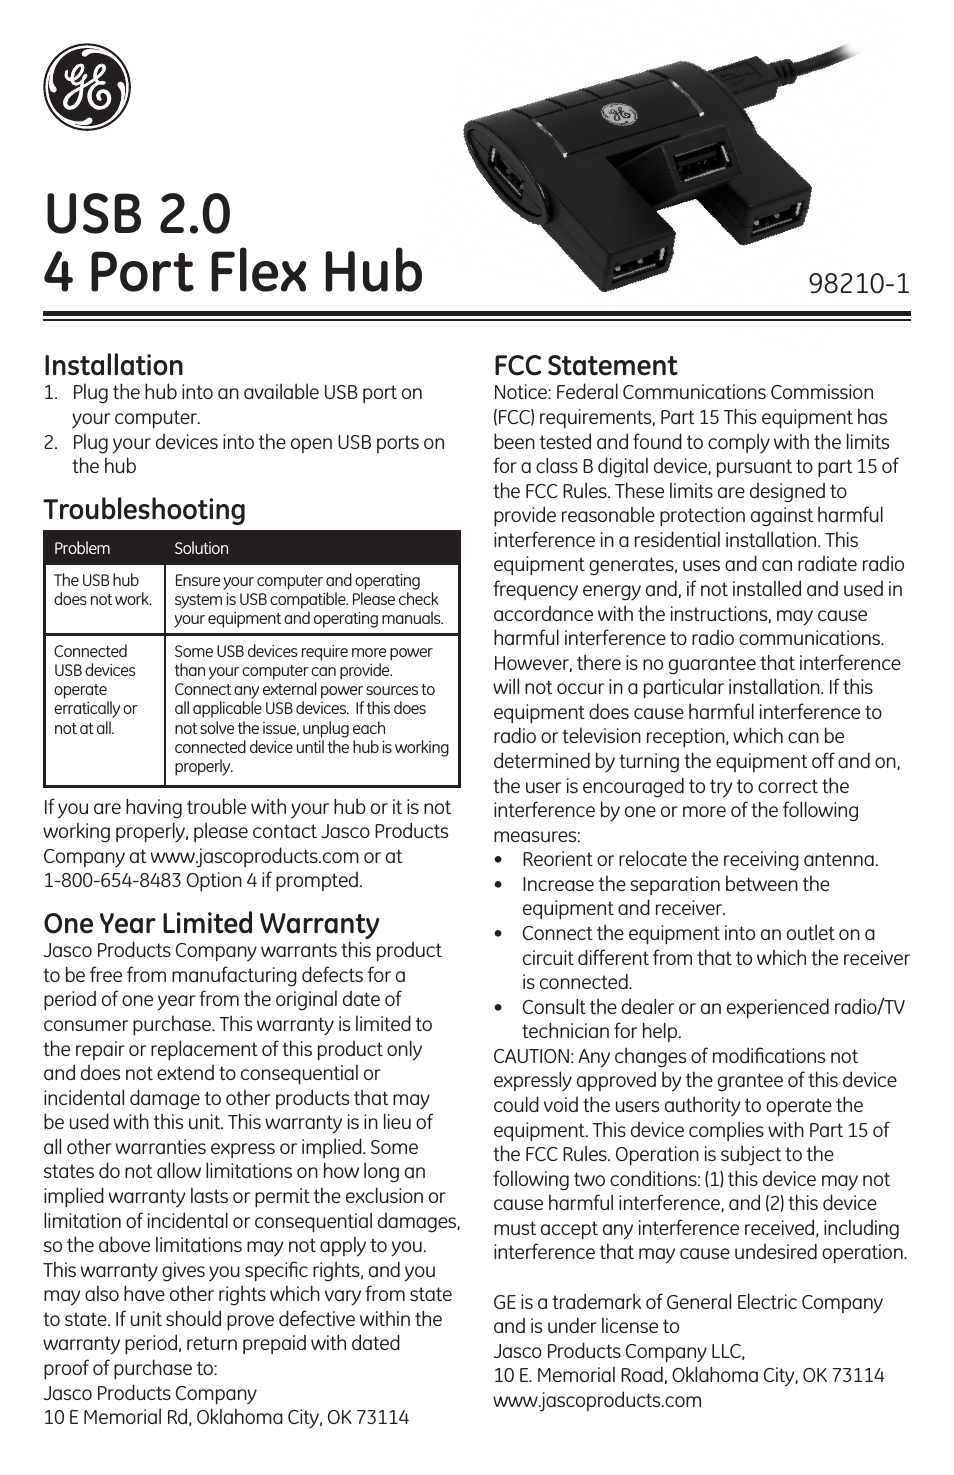 98210 GE USB 2.0 4-Port Flex Hub